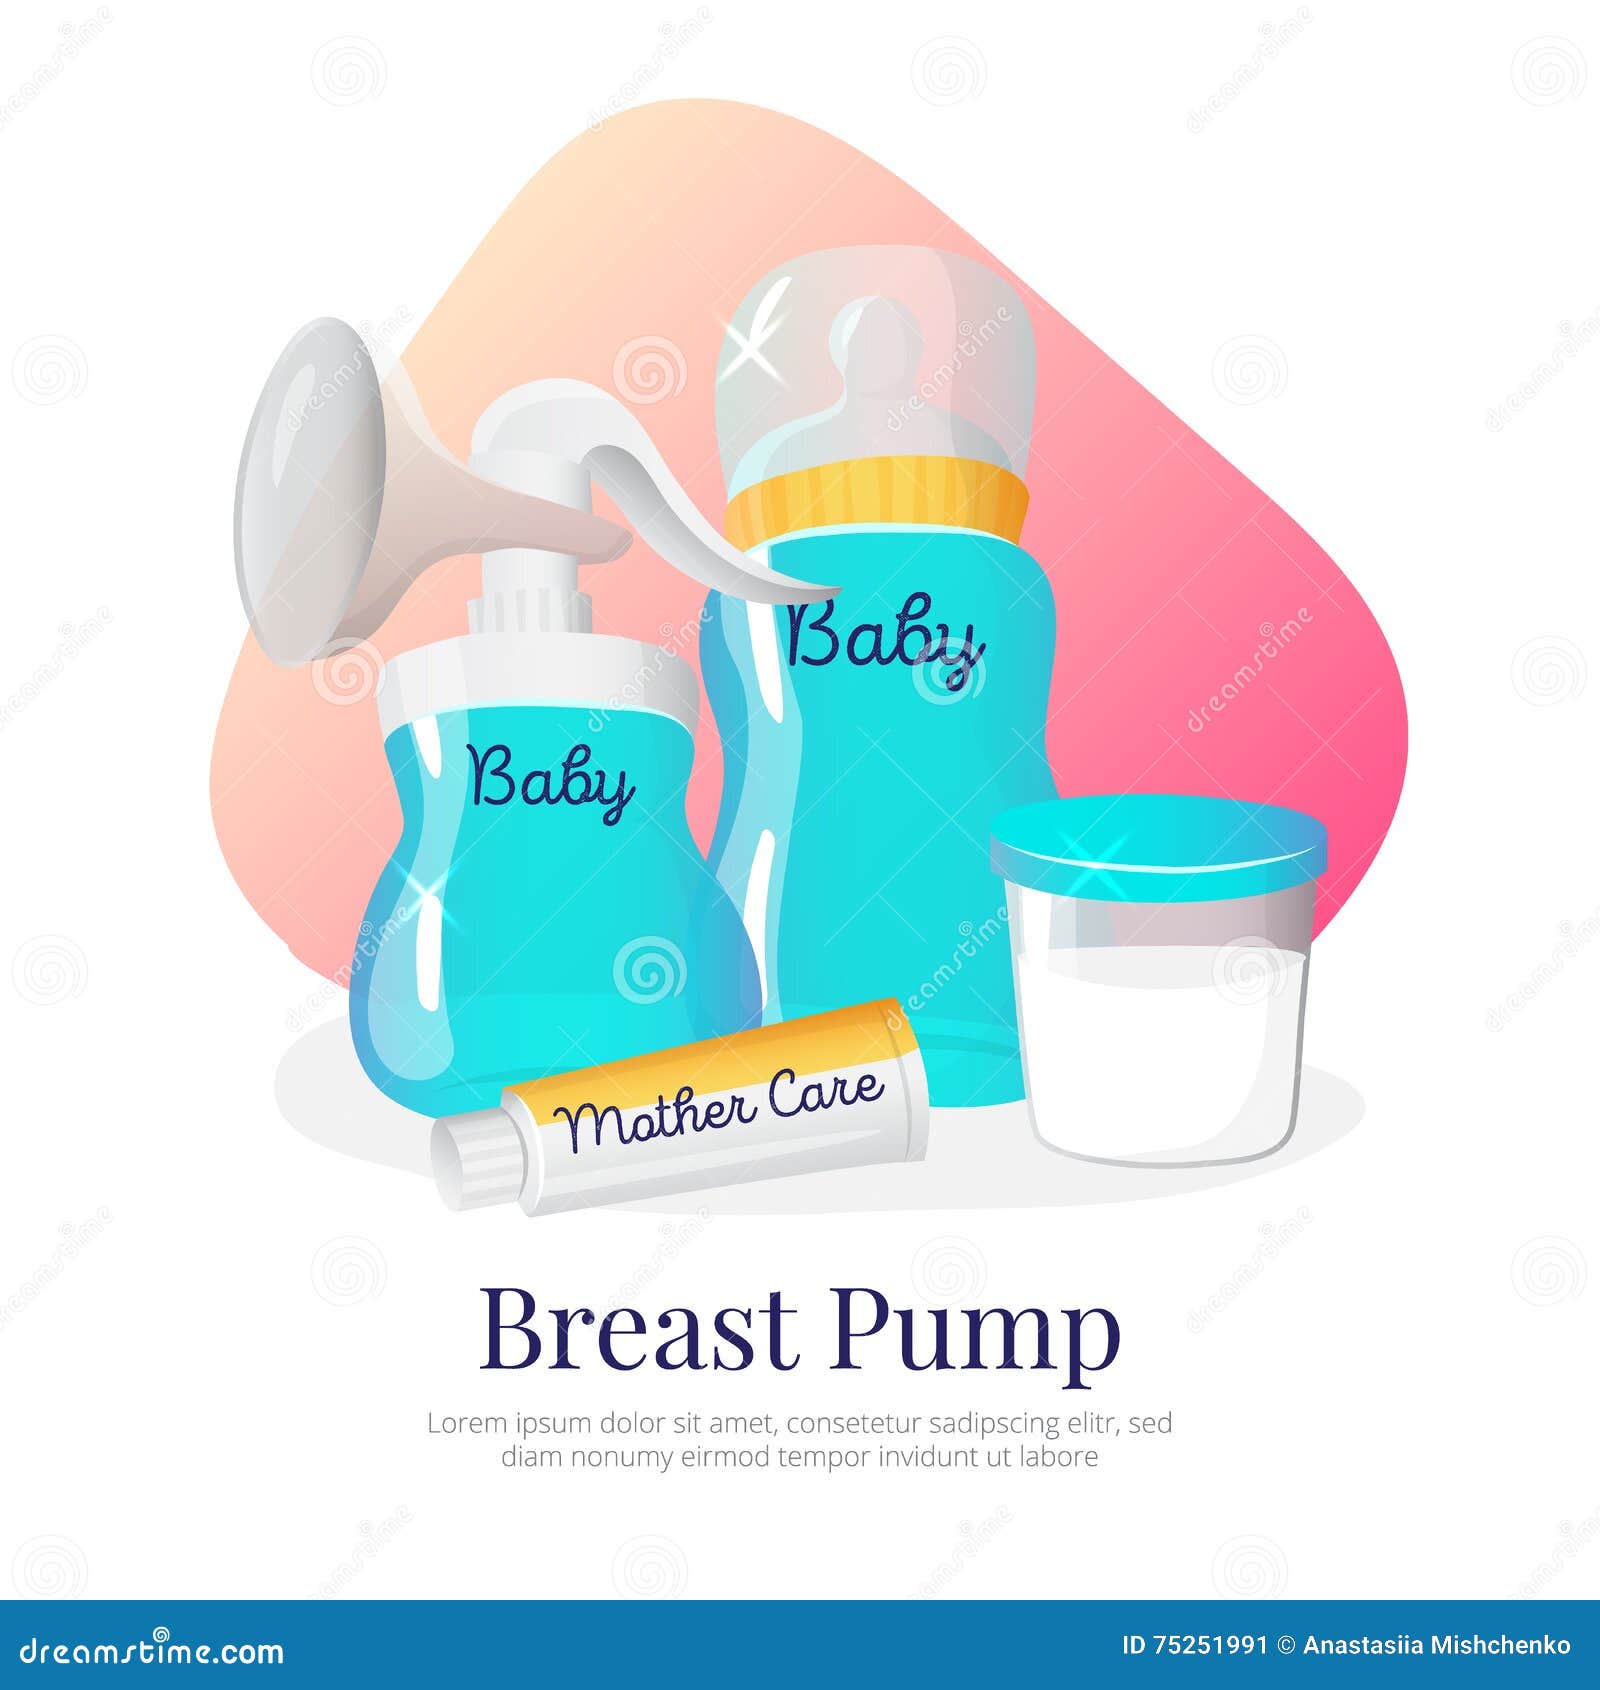 https://thumbs.dreamstime.com/z/vector-goods-expression-breast-milk-newborn-accessories-illustration-cartoon-style-pump-bottle-container-75251991.jpg